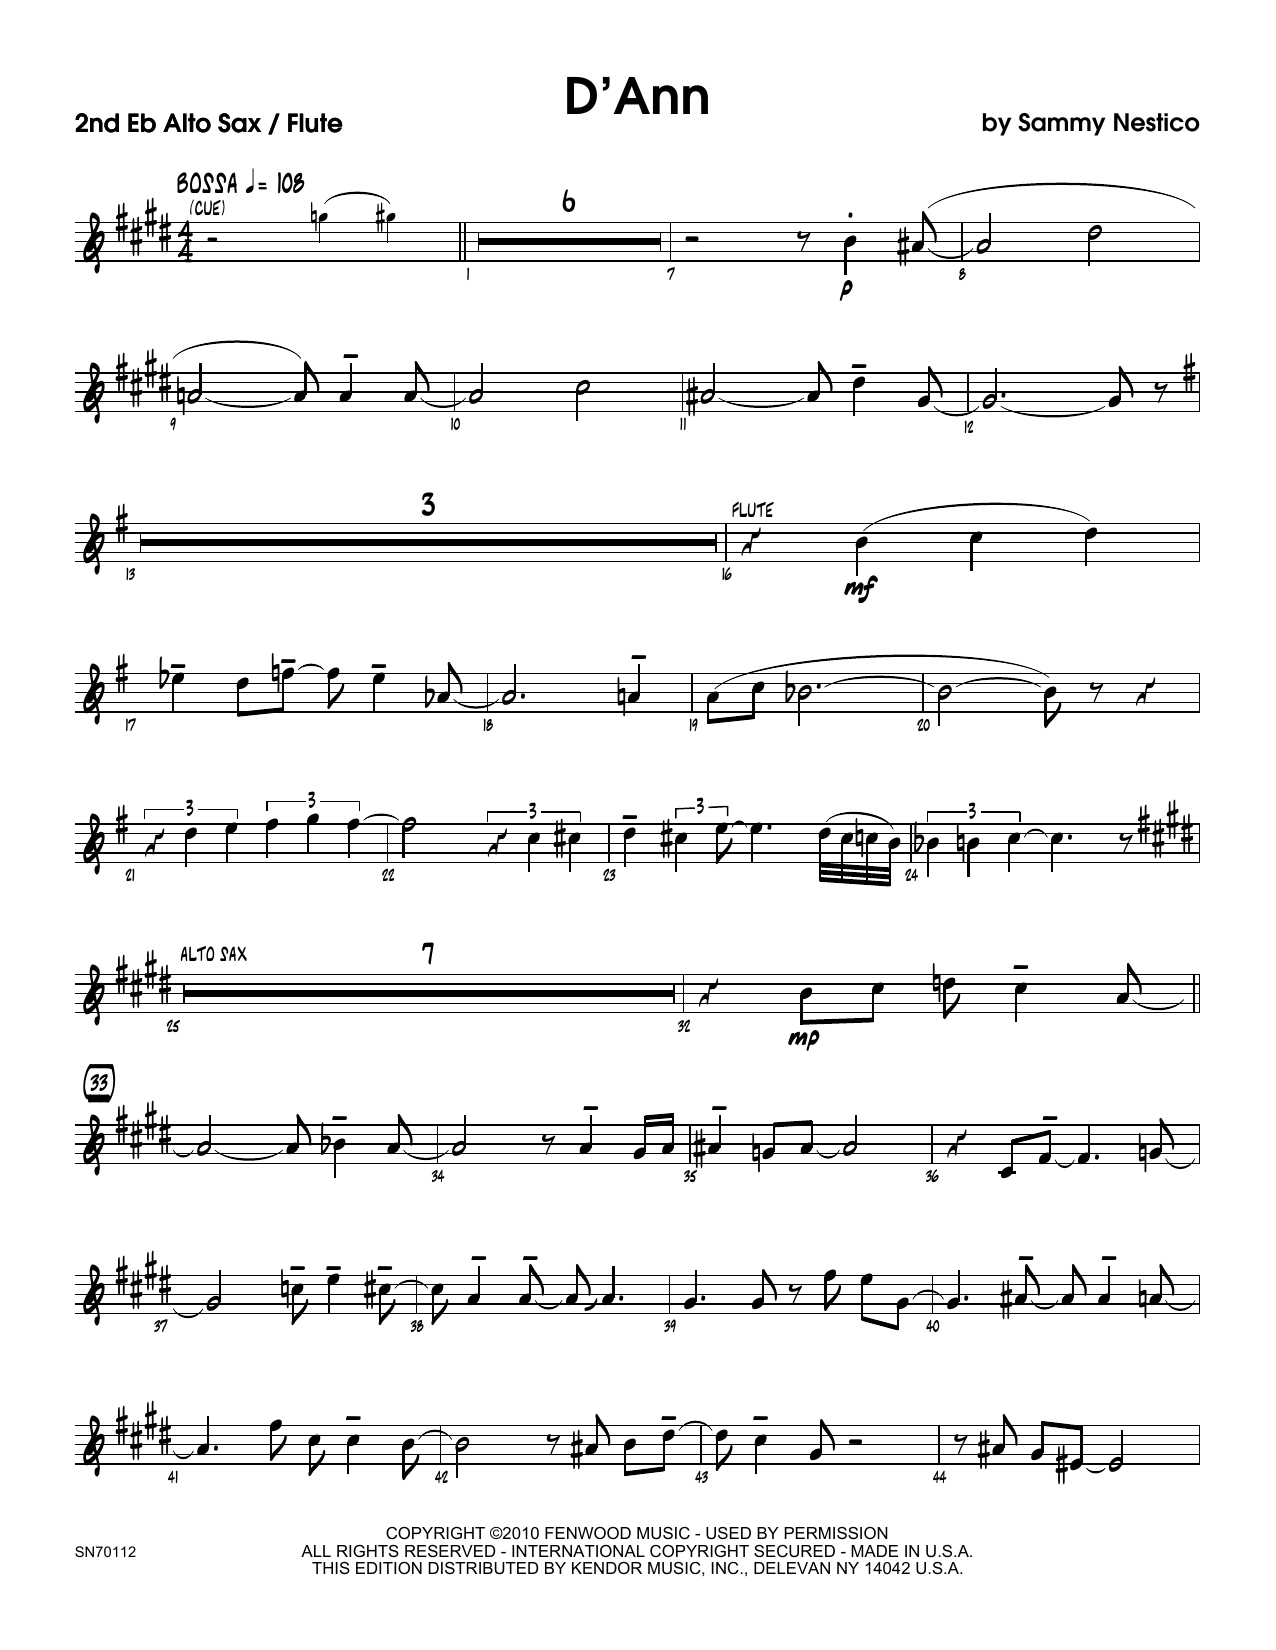 Download Sammy Nestico D'Ann - 2nd Eb Alto Saxophone Sheet Music